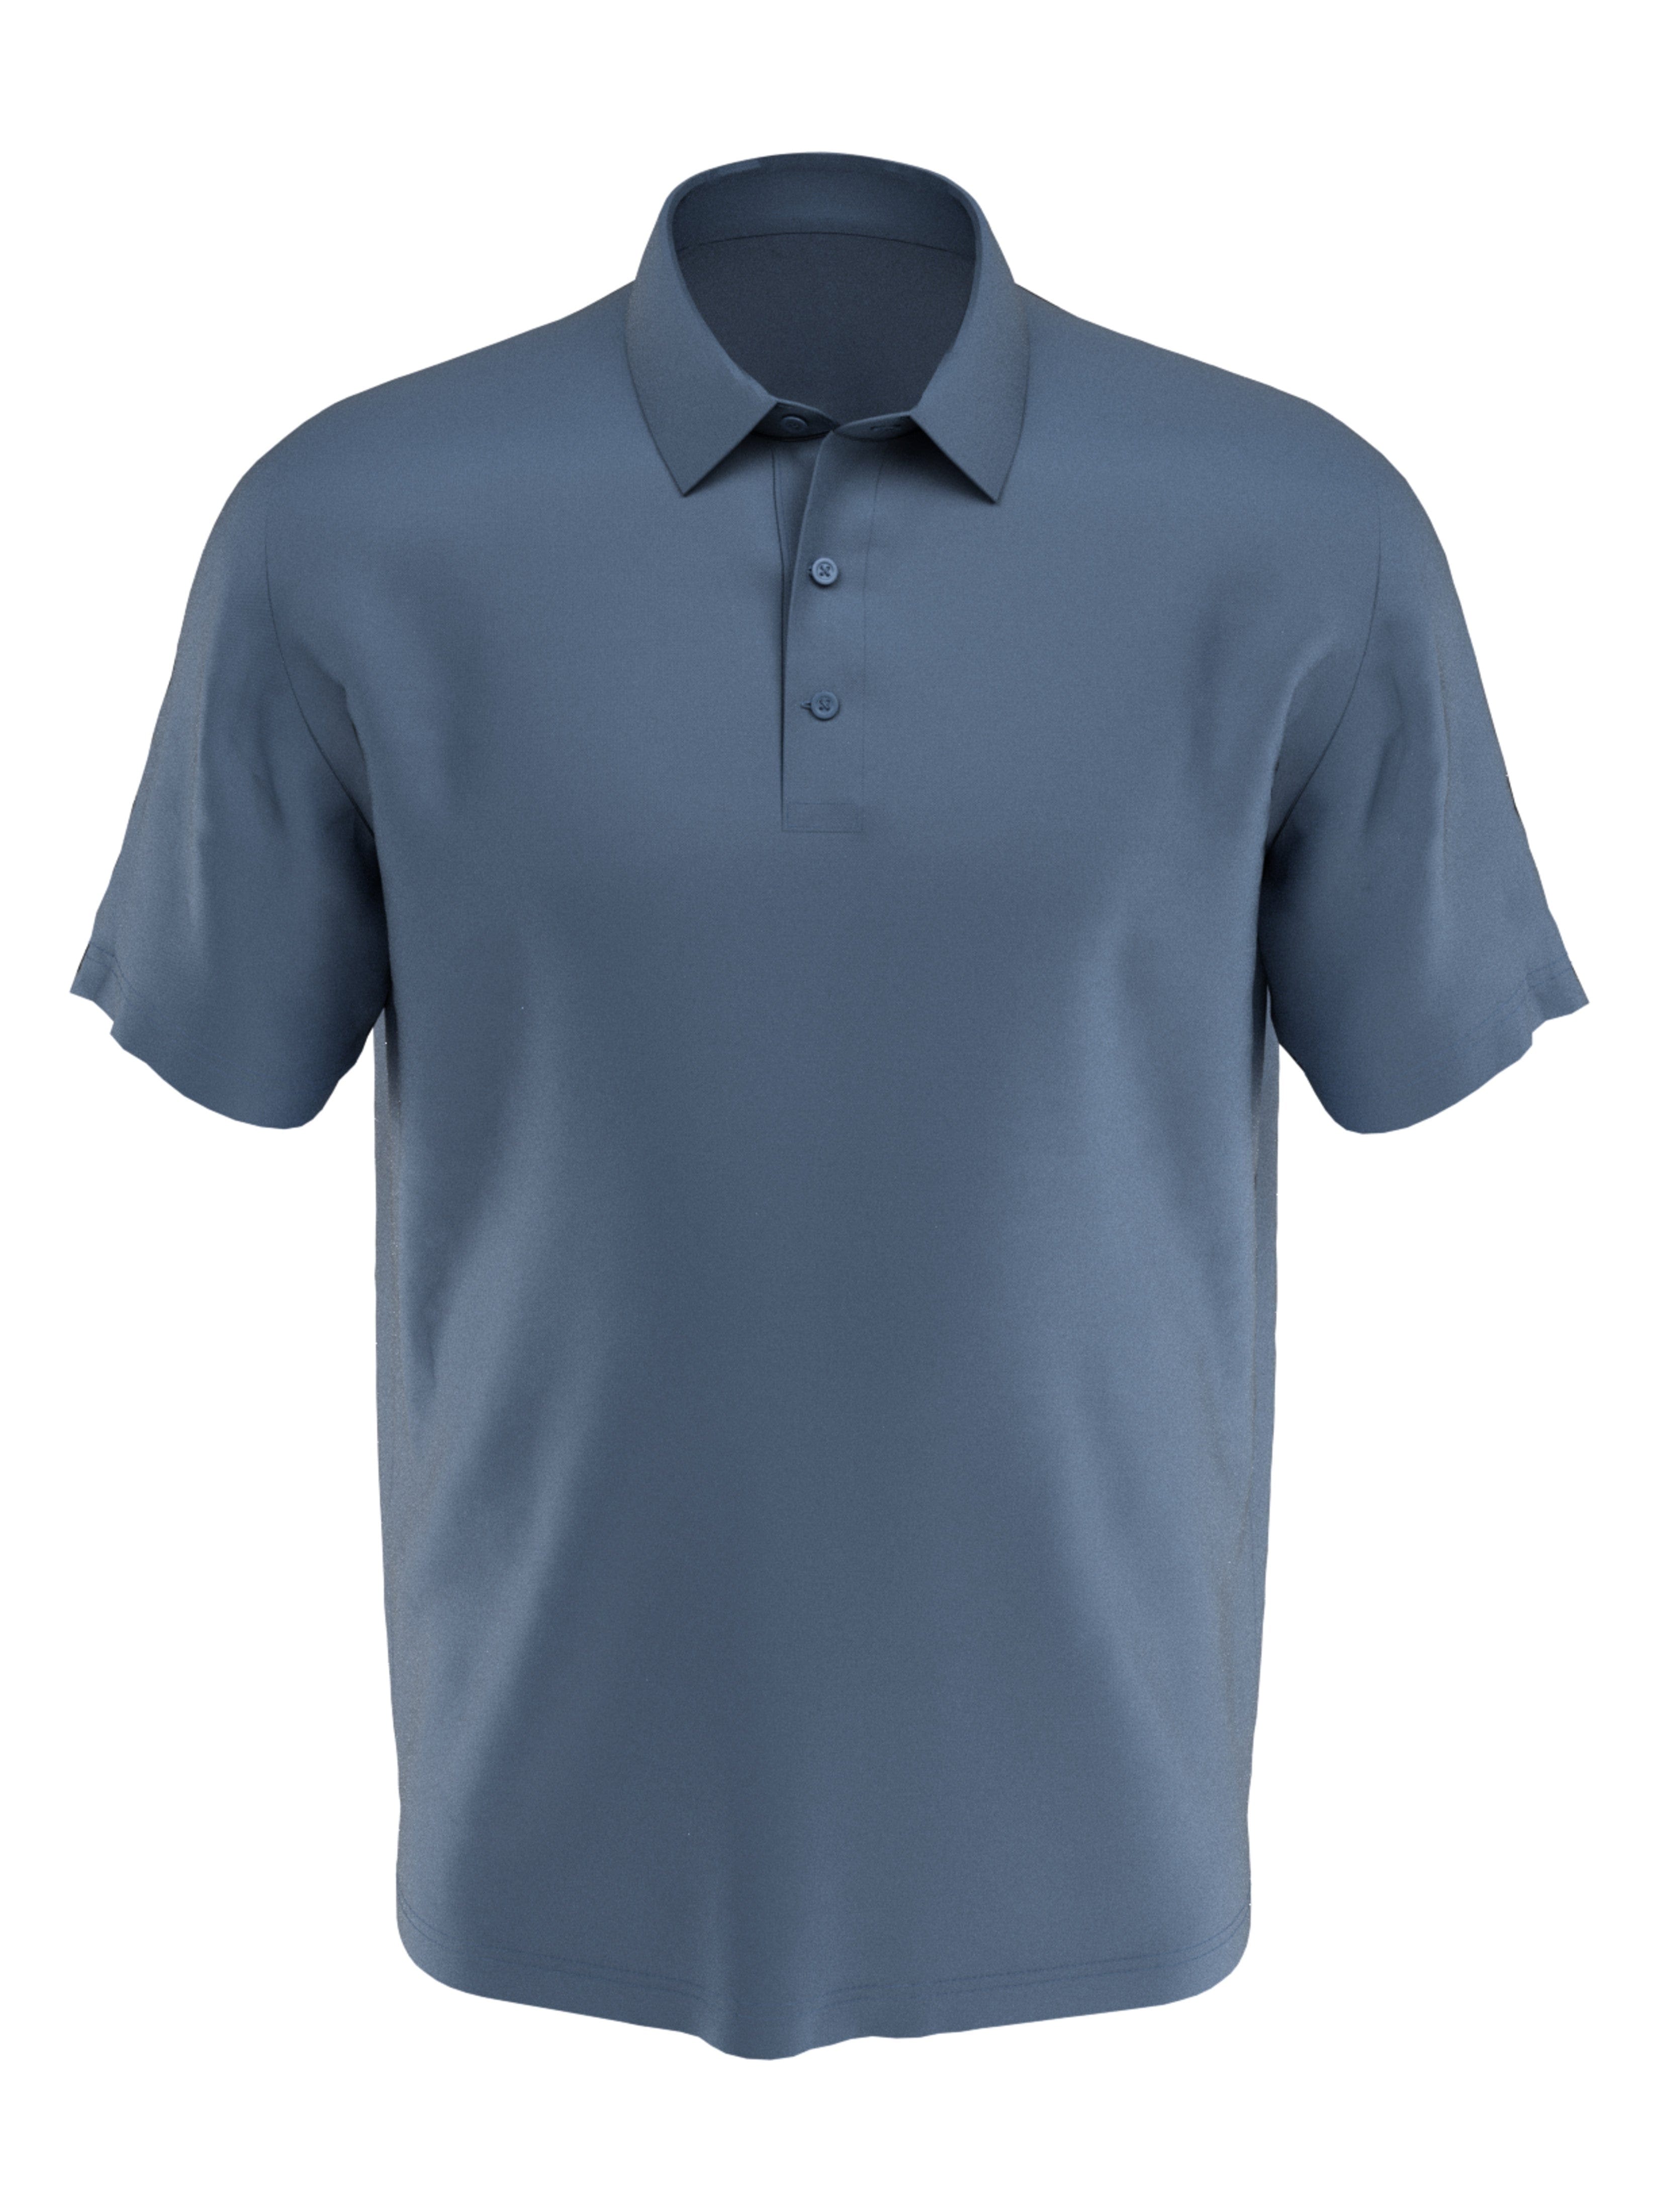 Callaway Apparel Mens Big & Tall Solid Swing Tech Golf Polo Shirt, Size 4X, Blue Horizon, Polyester/Elastane | Golf Apparel Shop